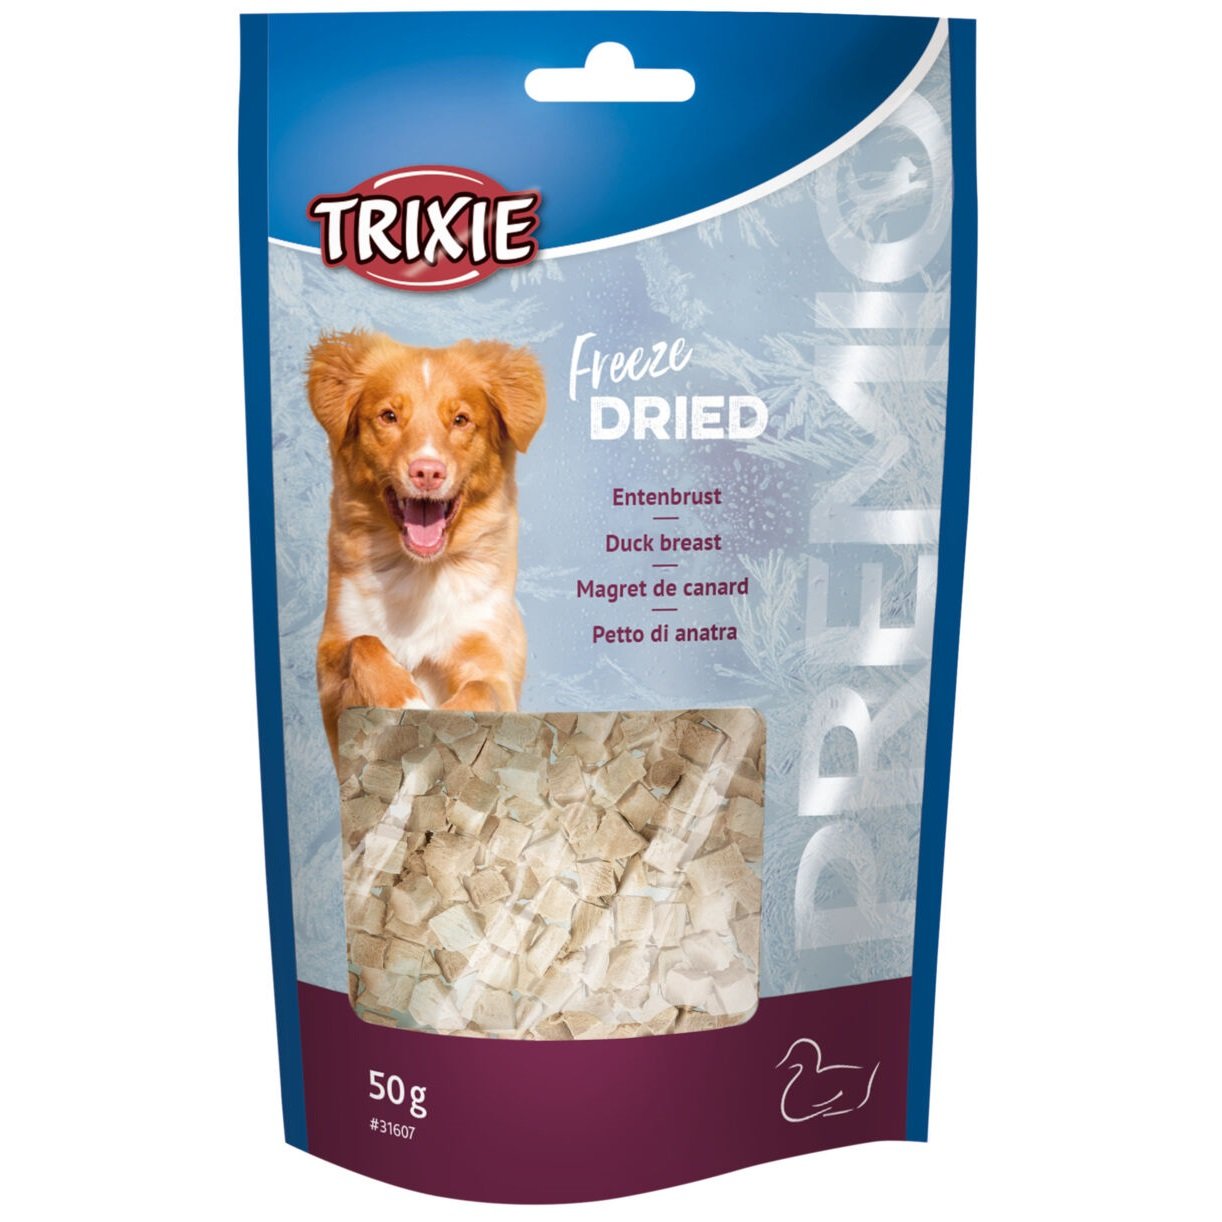 Лакомства для собак Trixie Premio Freeze Dried, утиная грудка, 50 г (31607) - фото 1